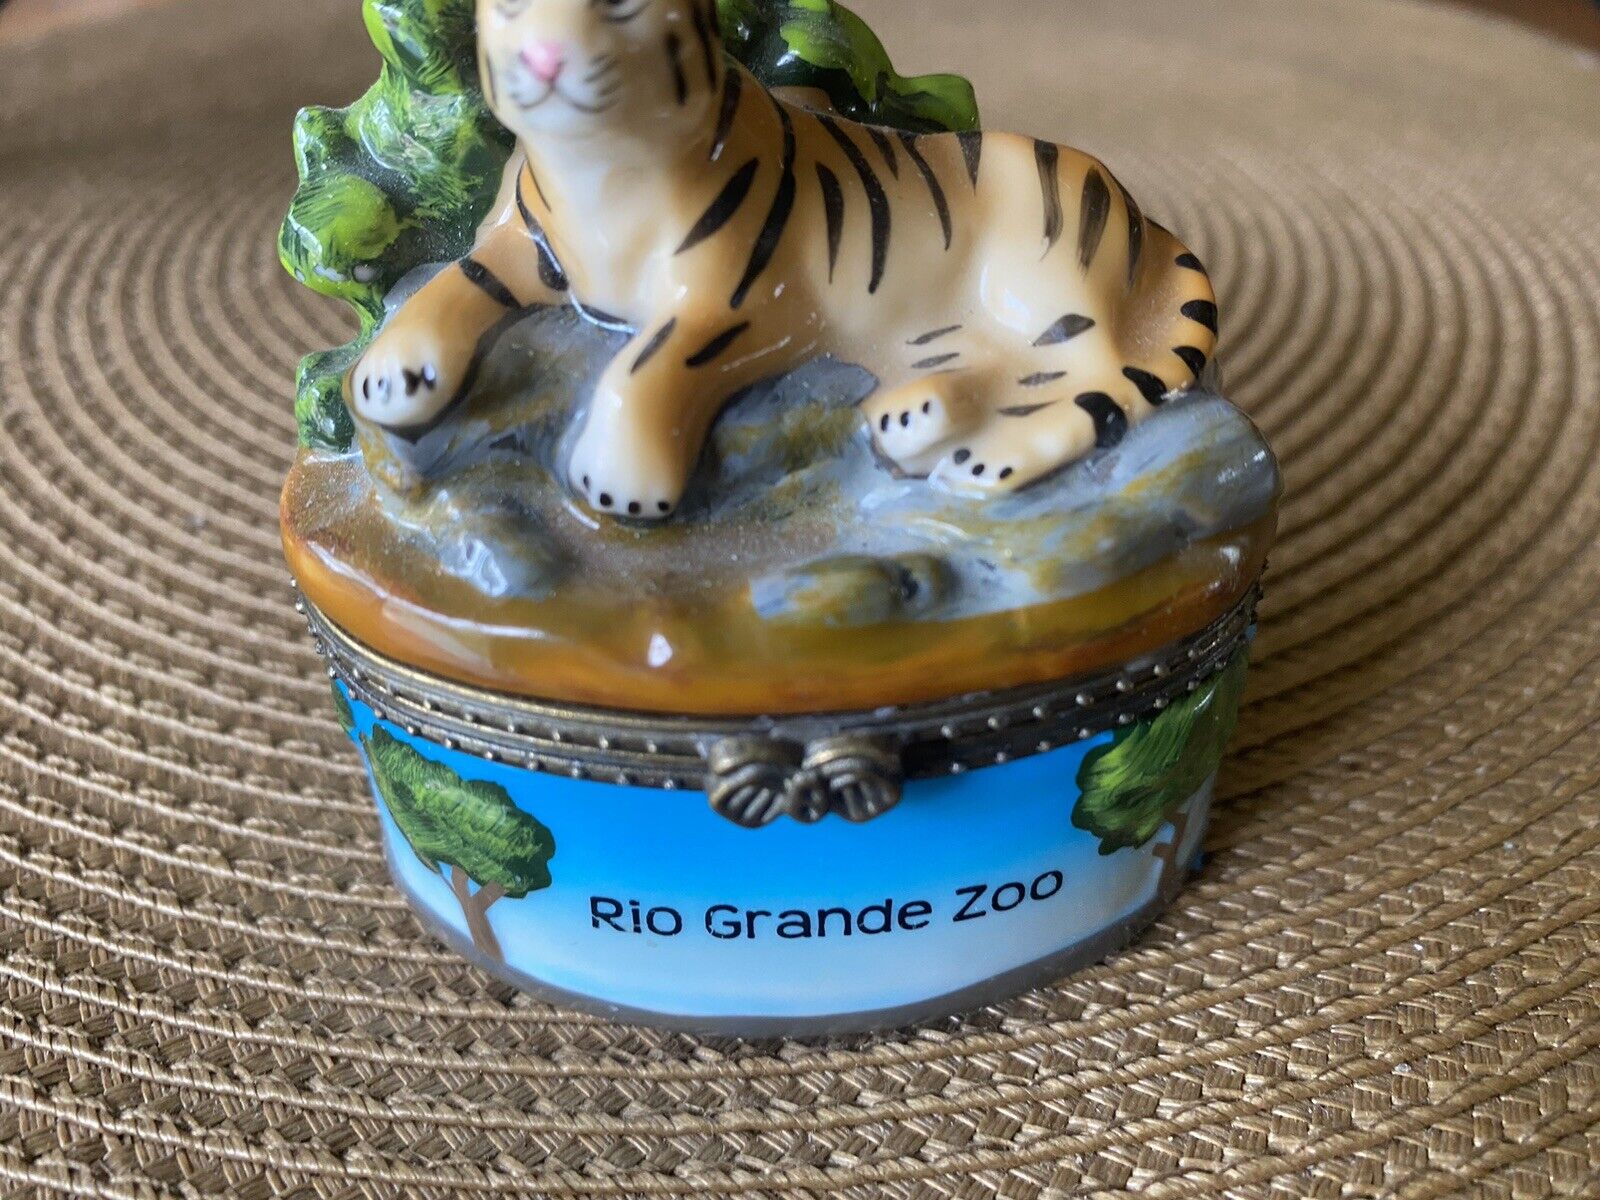 Ceramic/porcelain trinket box with a tiger